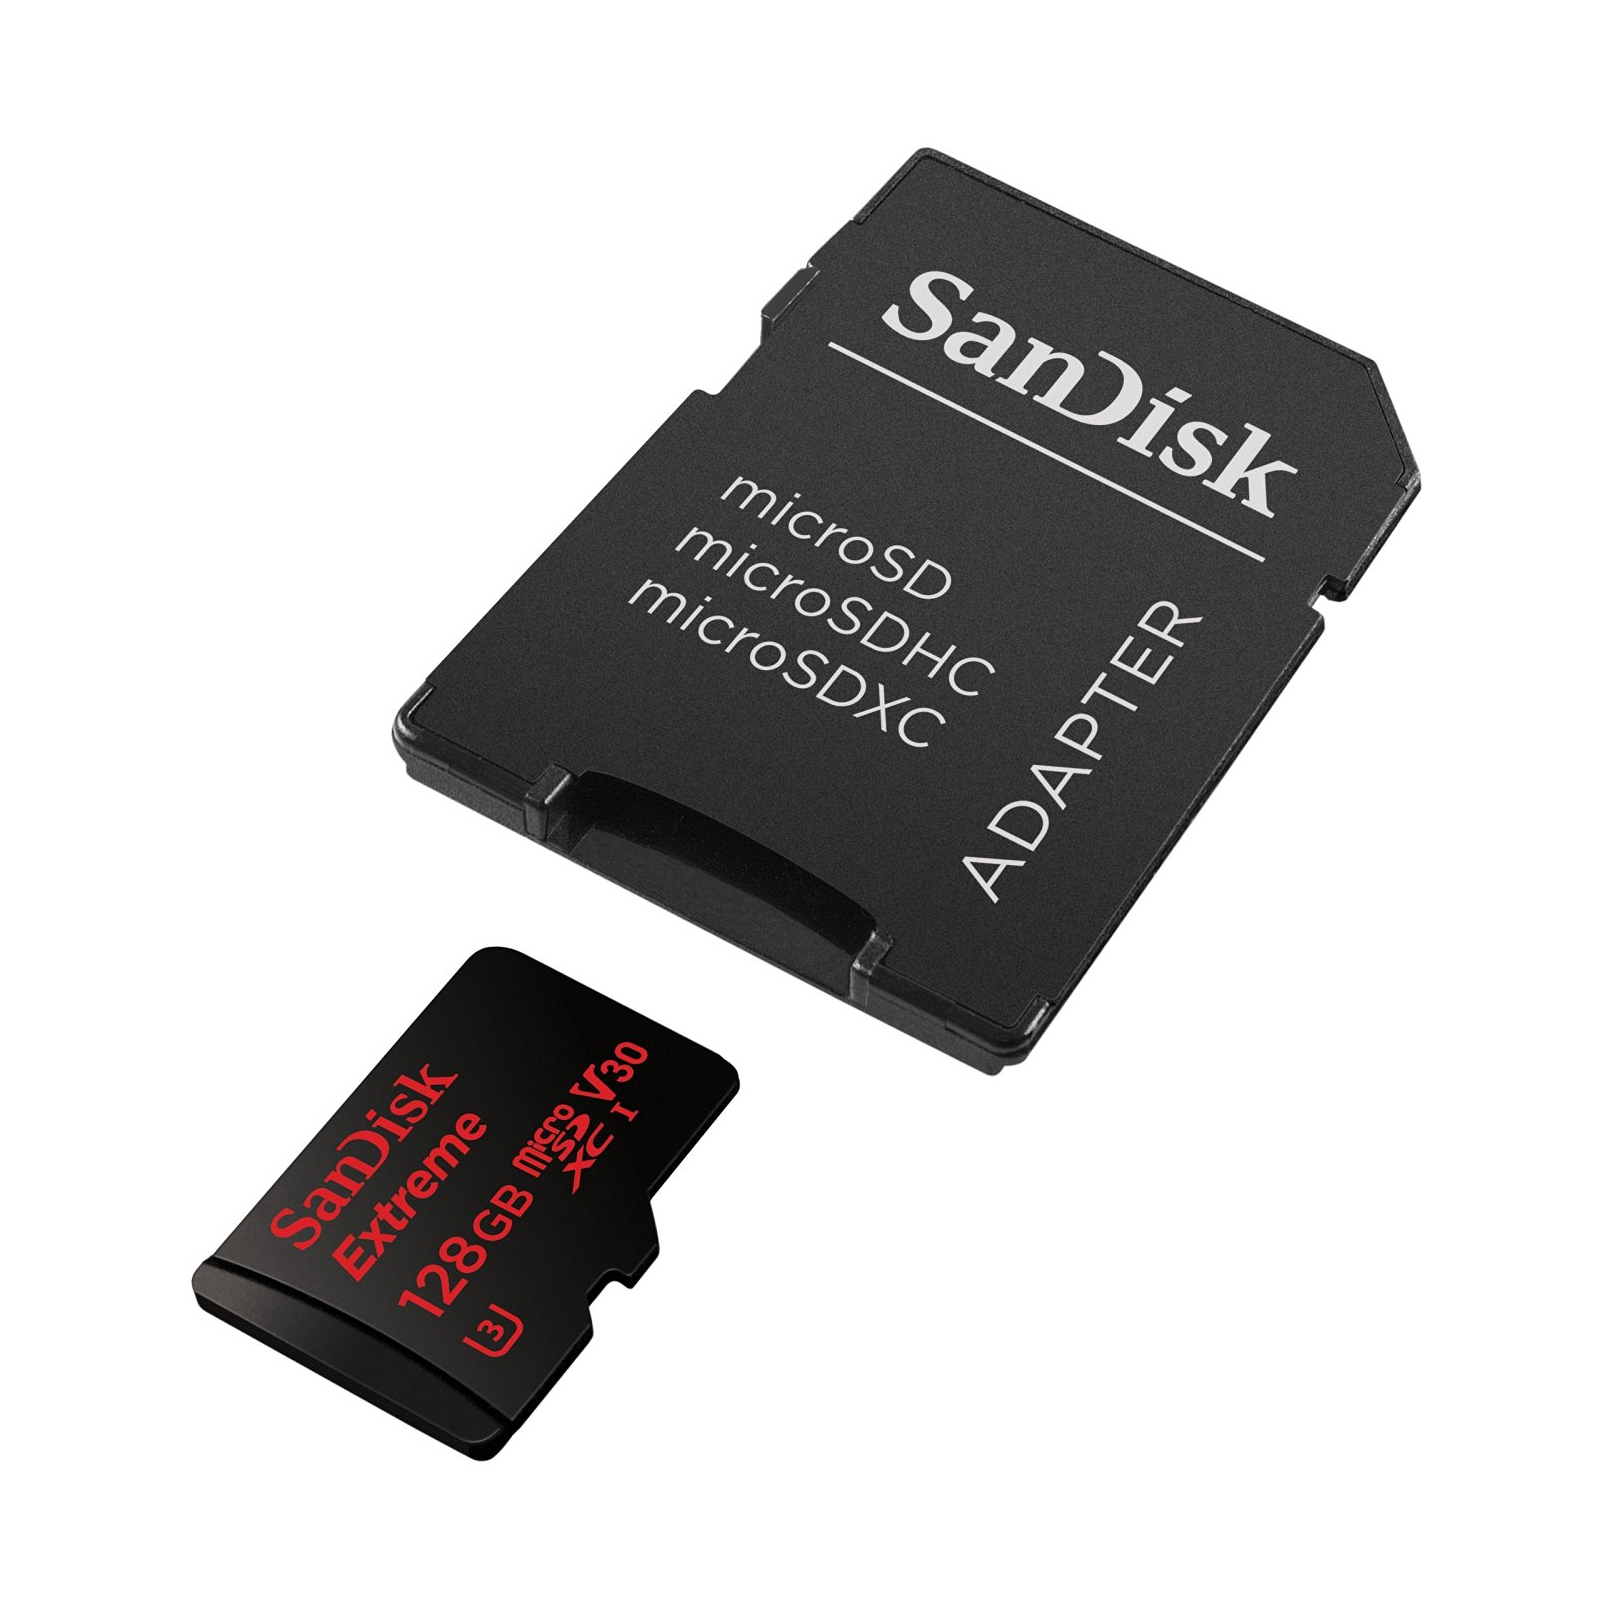 Карта памяти SanDisk 128GB microSDXC class 10 UHS-I 4K Extreme Action (SDSQXVF-128G-GN6MA) изображение 2